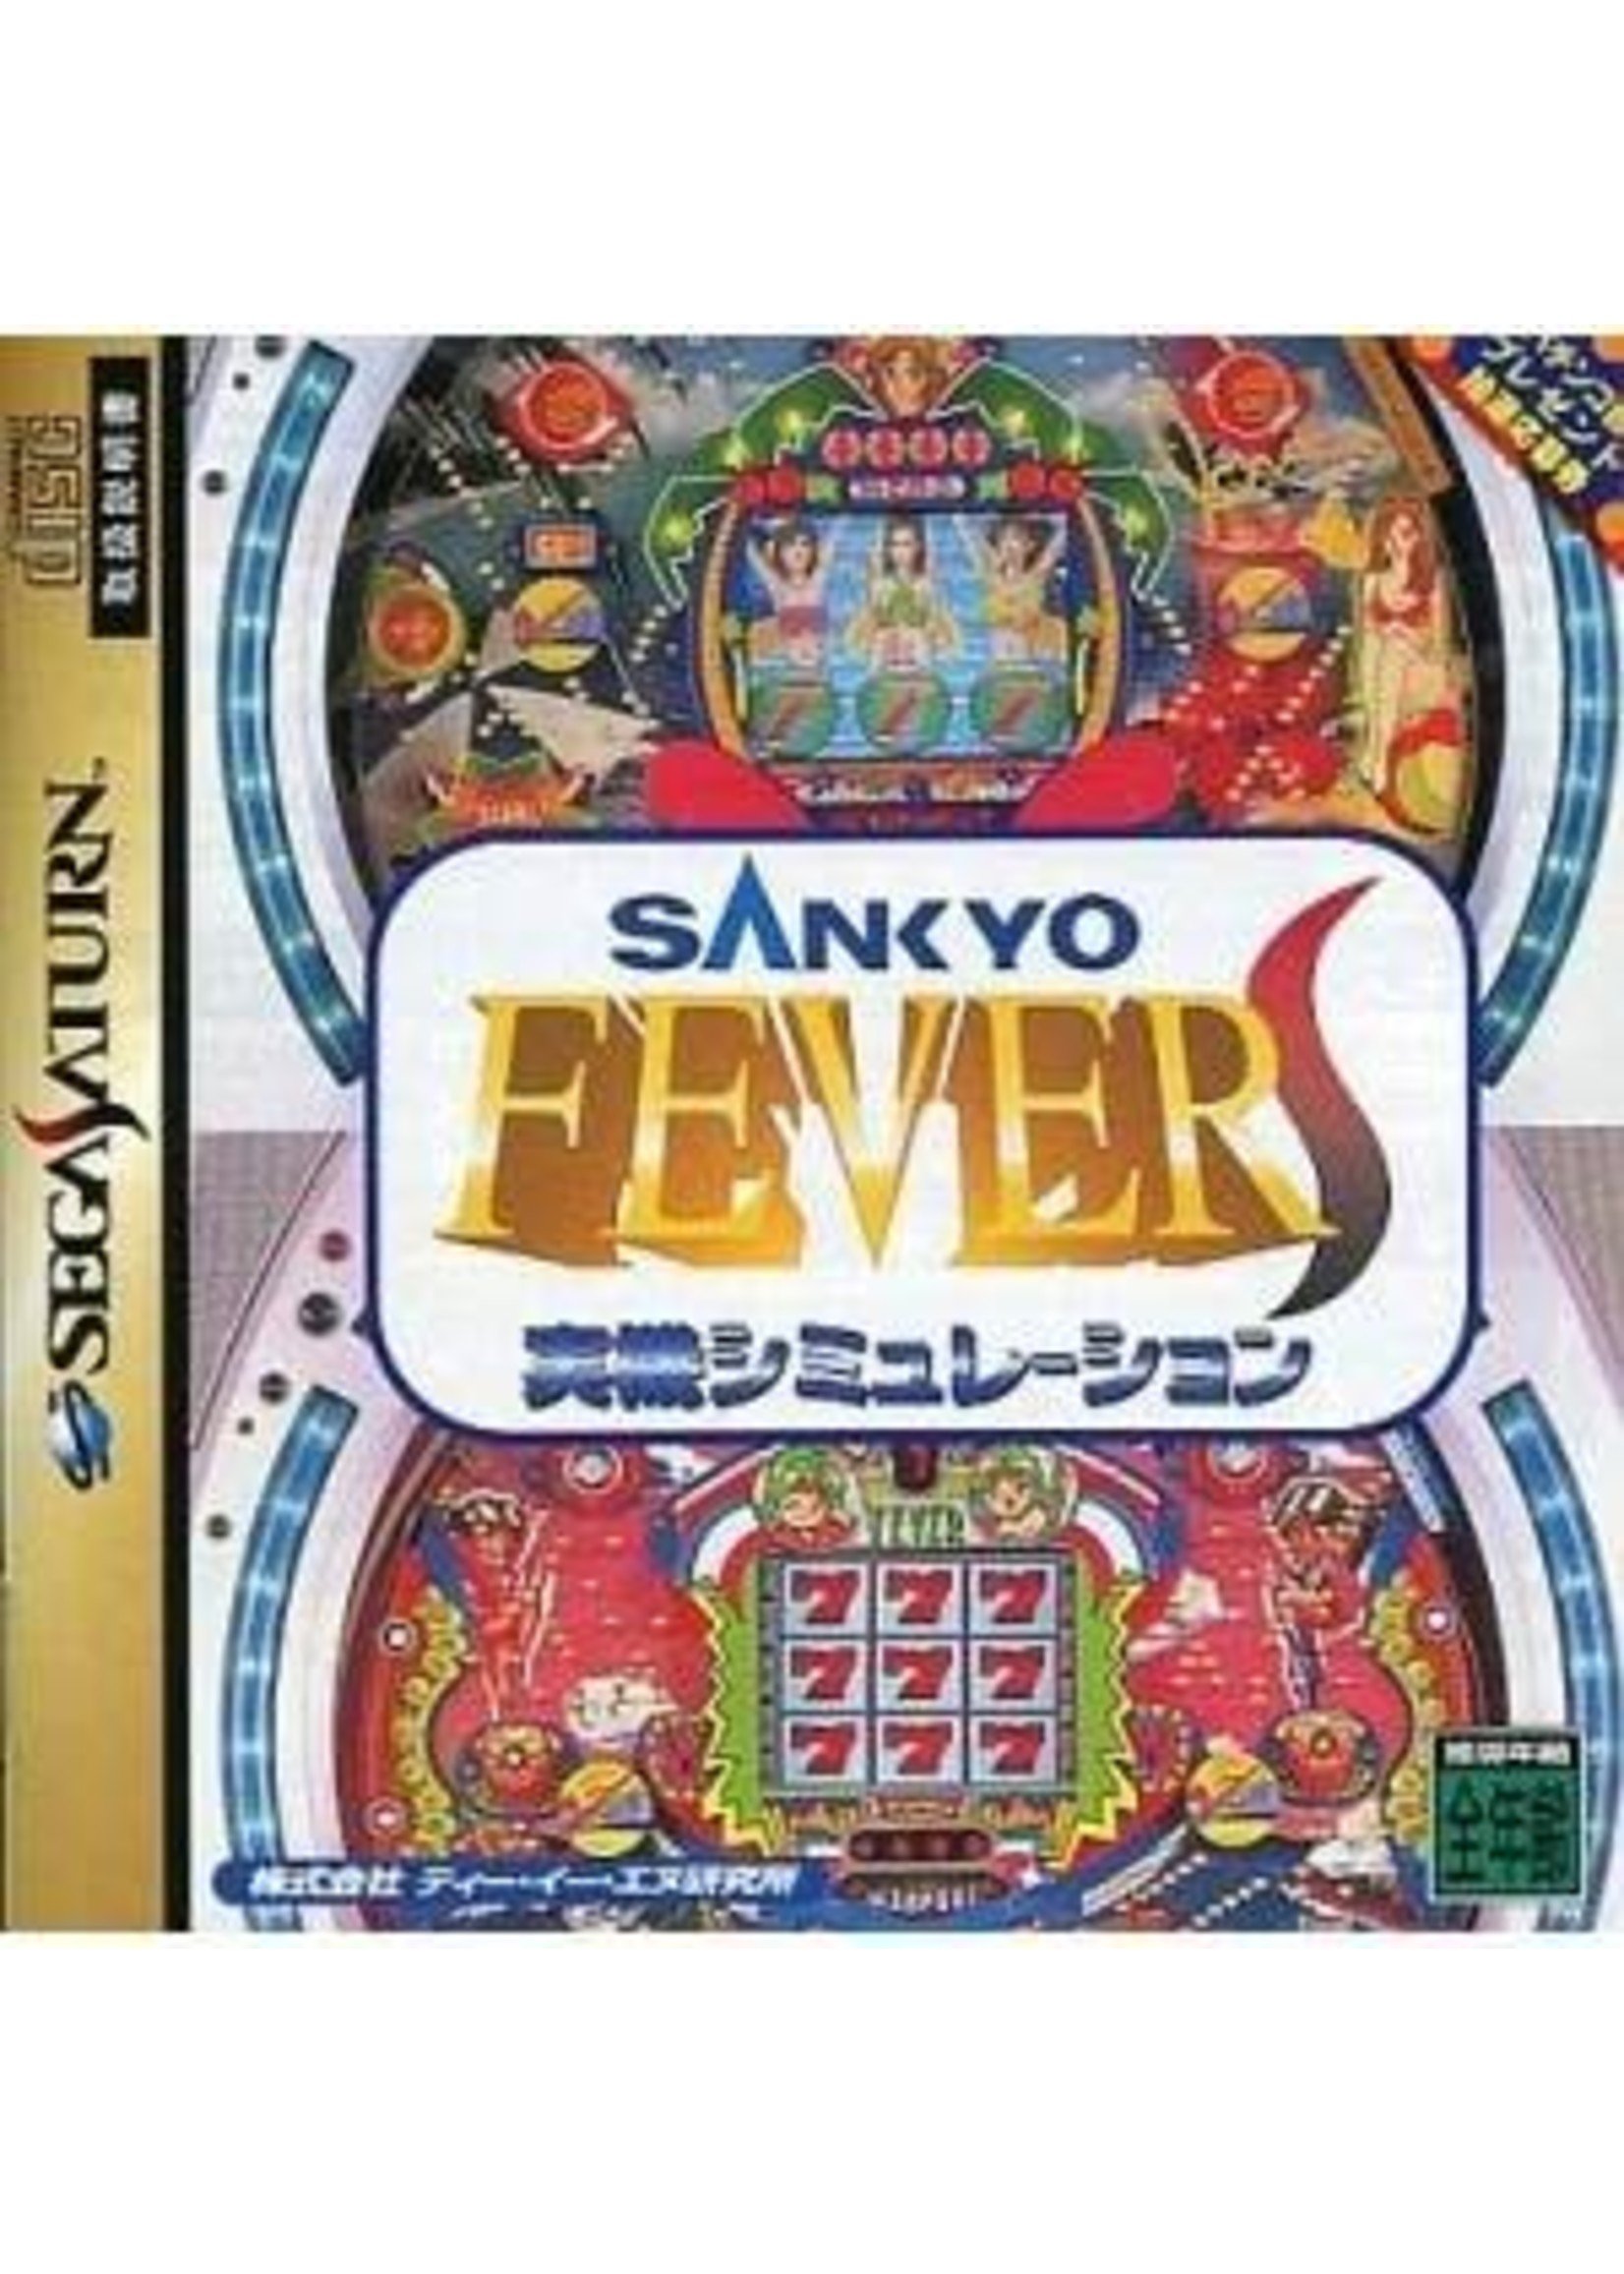 Sega Saturn Sankyo Fever